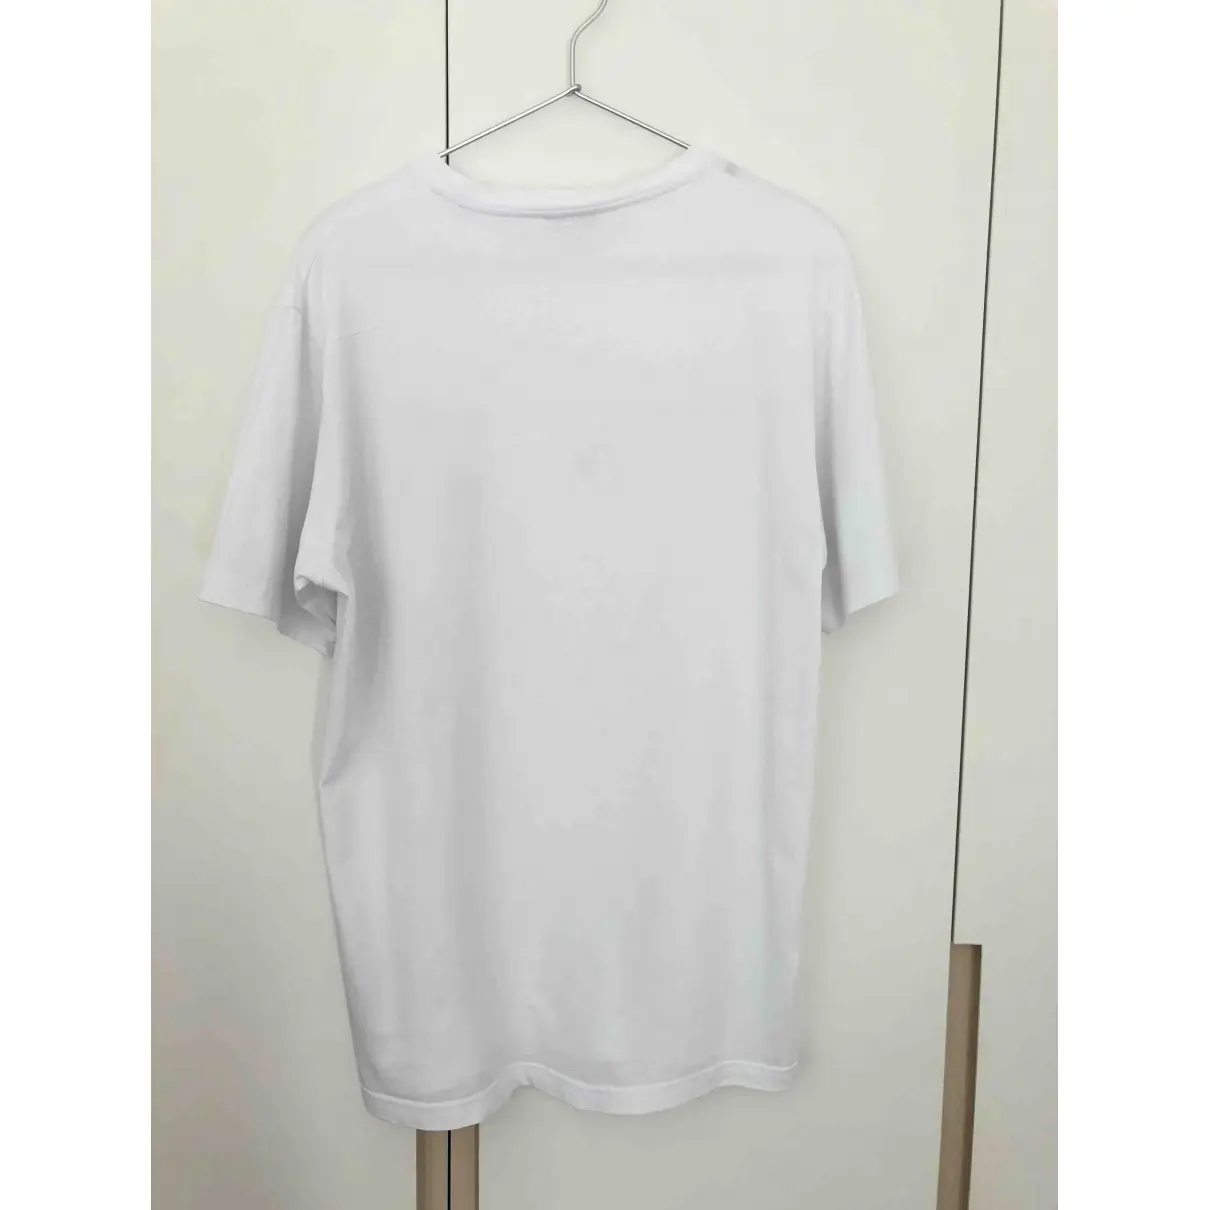 Buy Dior Homme White Cotton T-shirt online